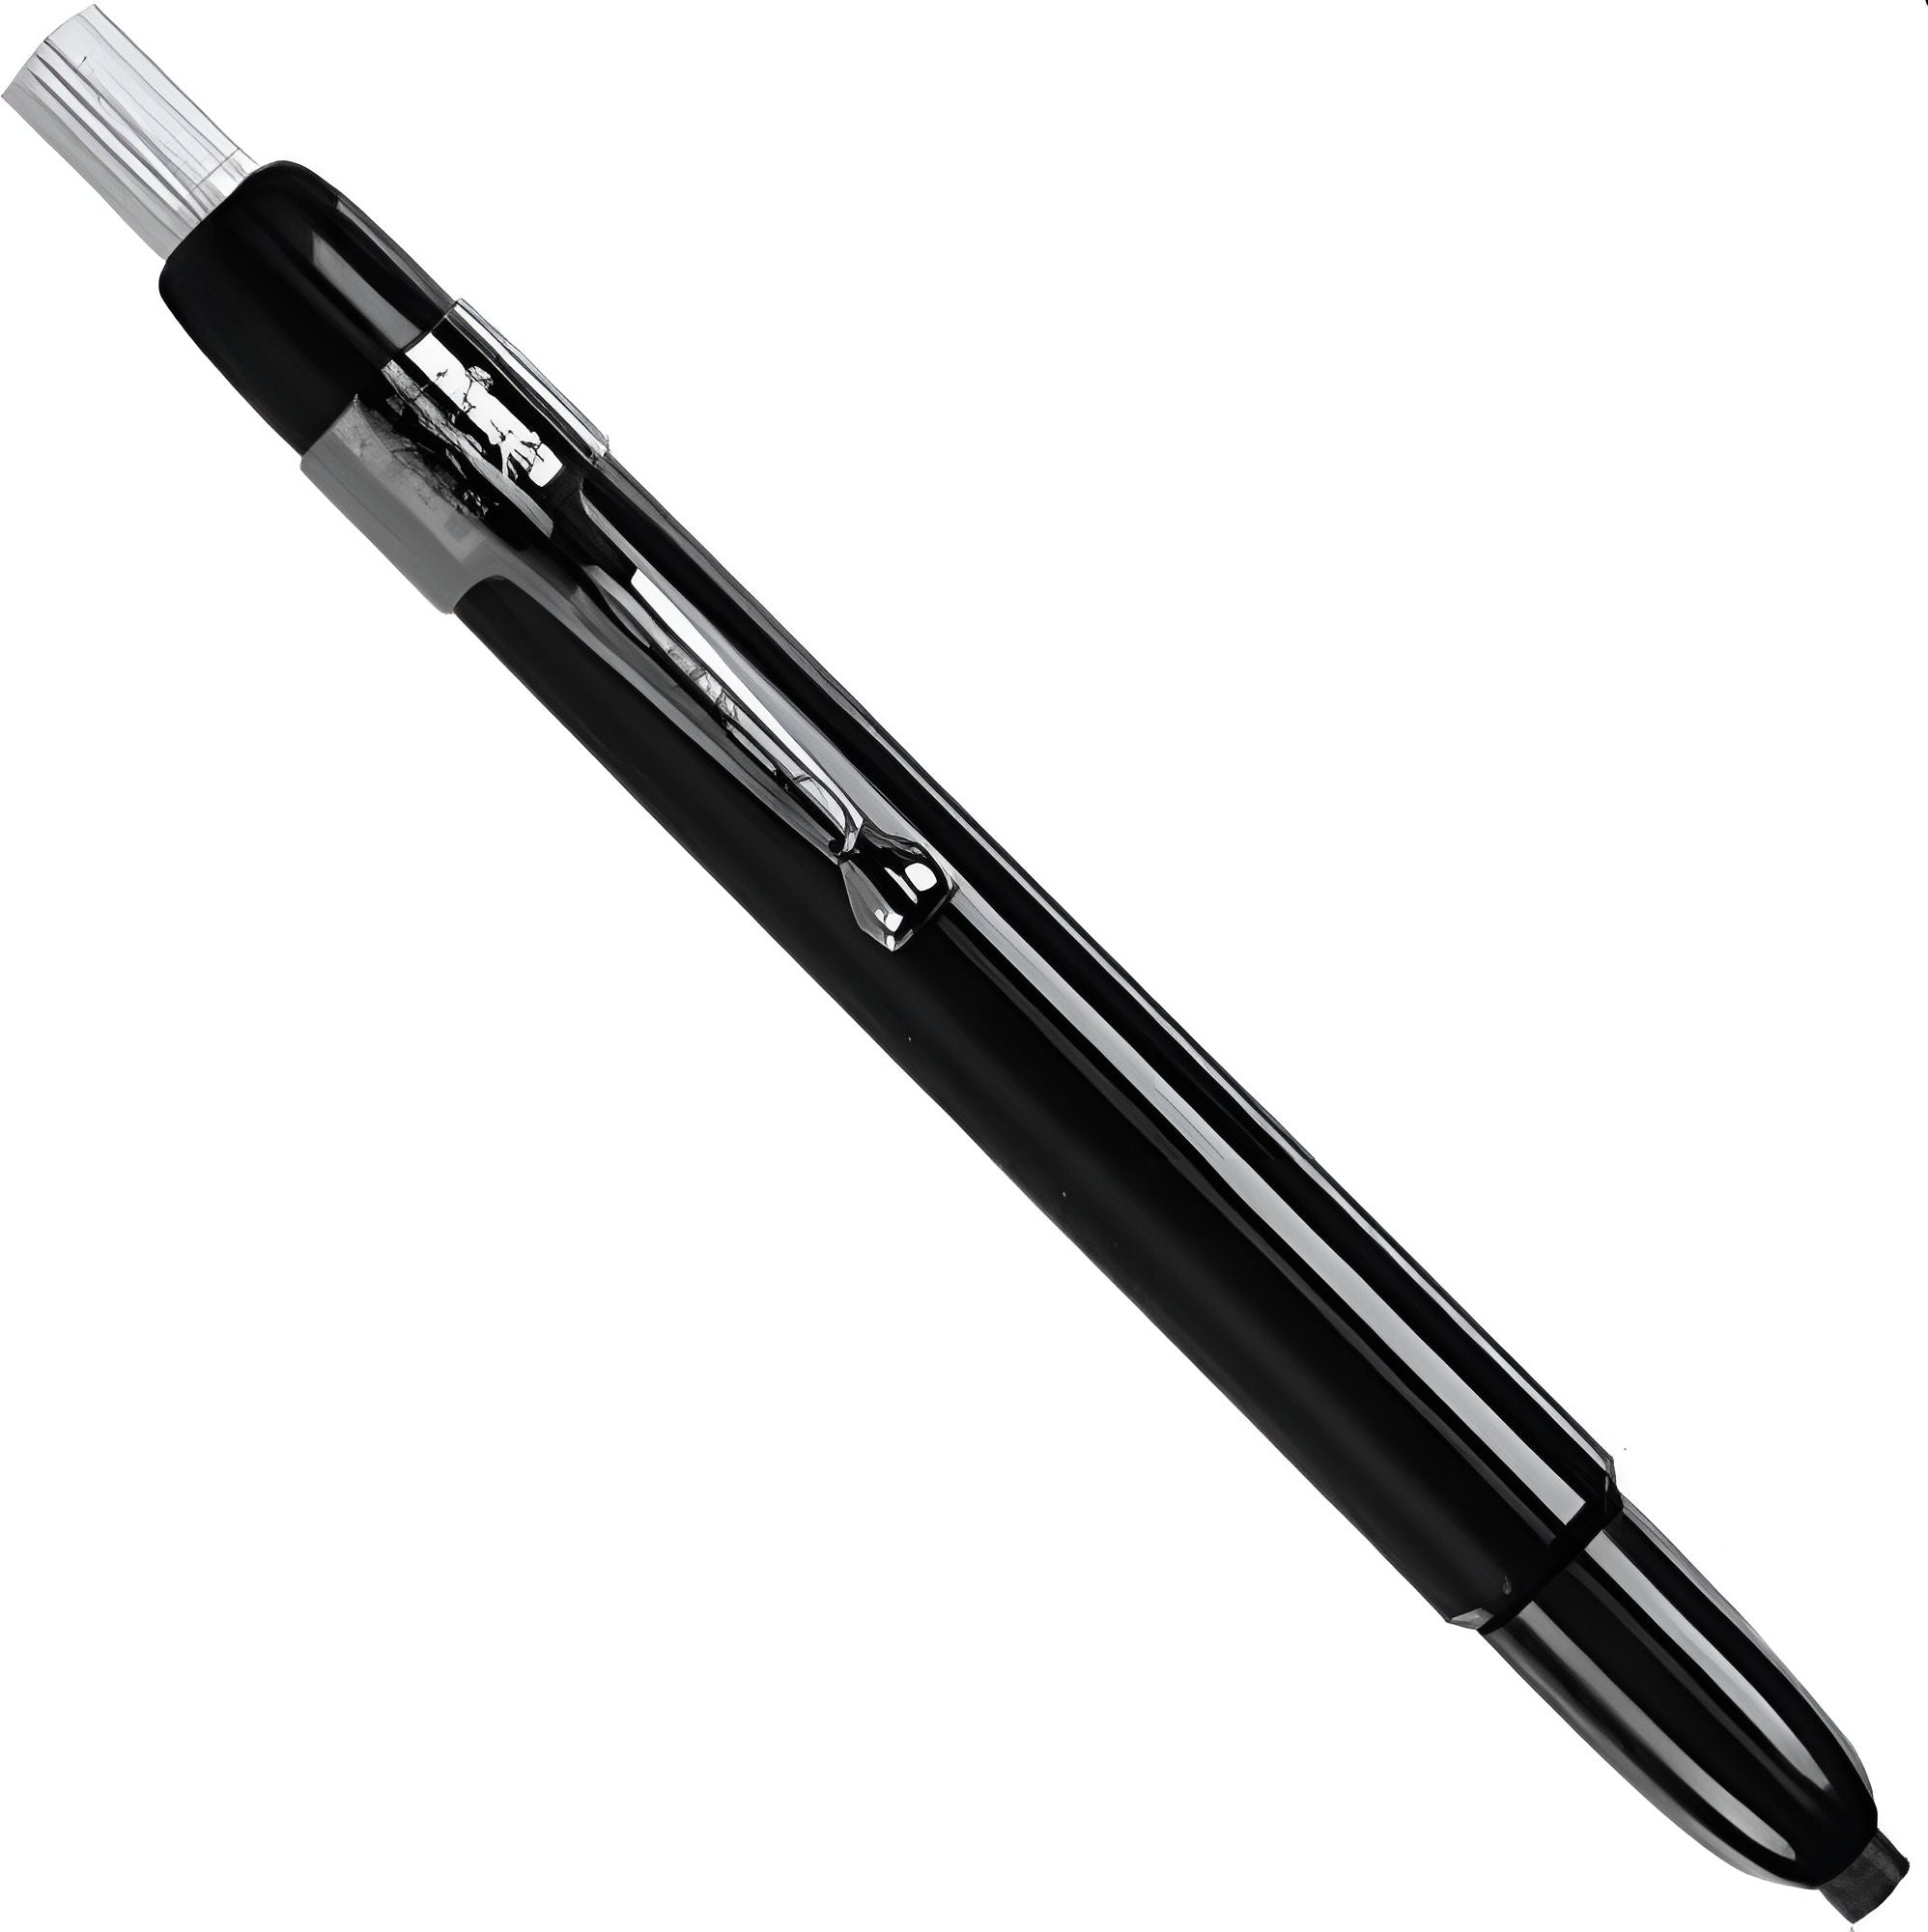 Listo - White Marking Pencil Writes on Any Surface, 12/Box - 1620BWEN